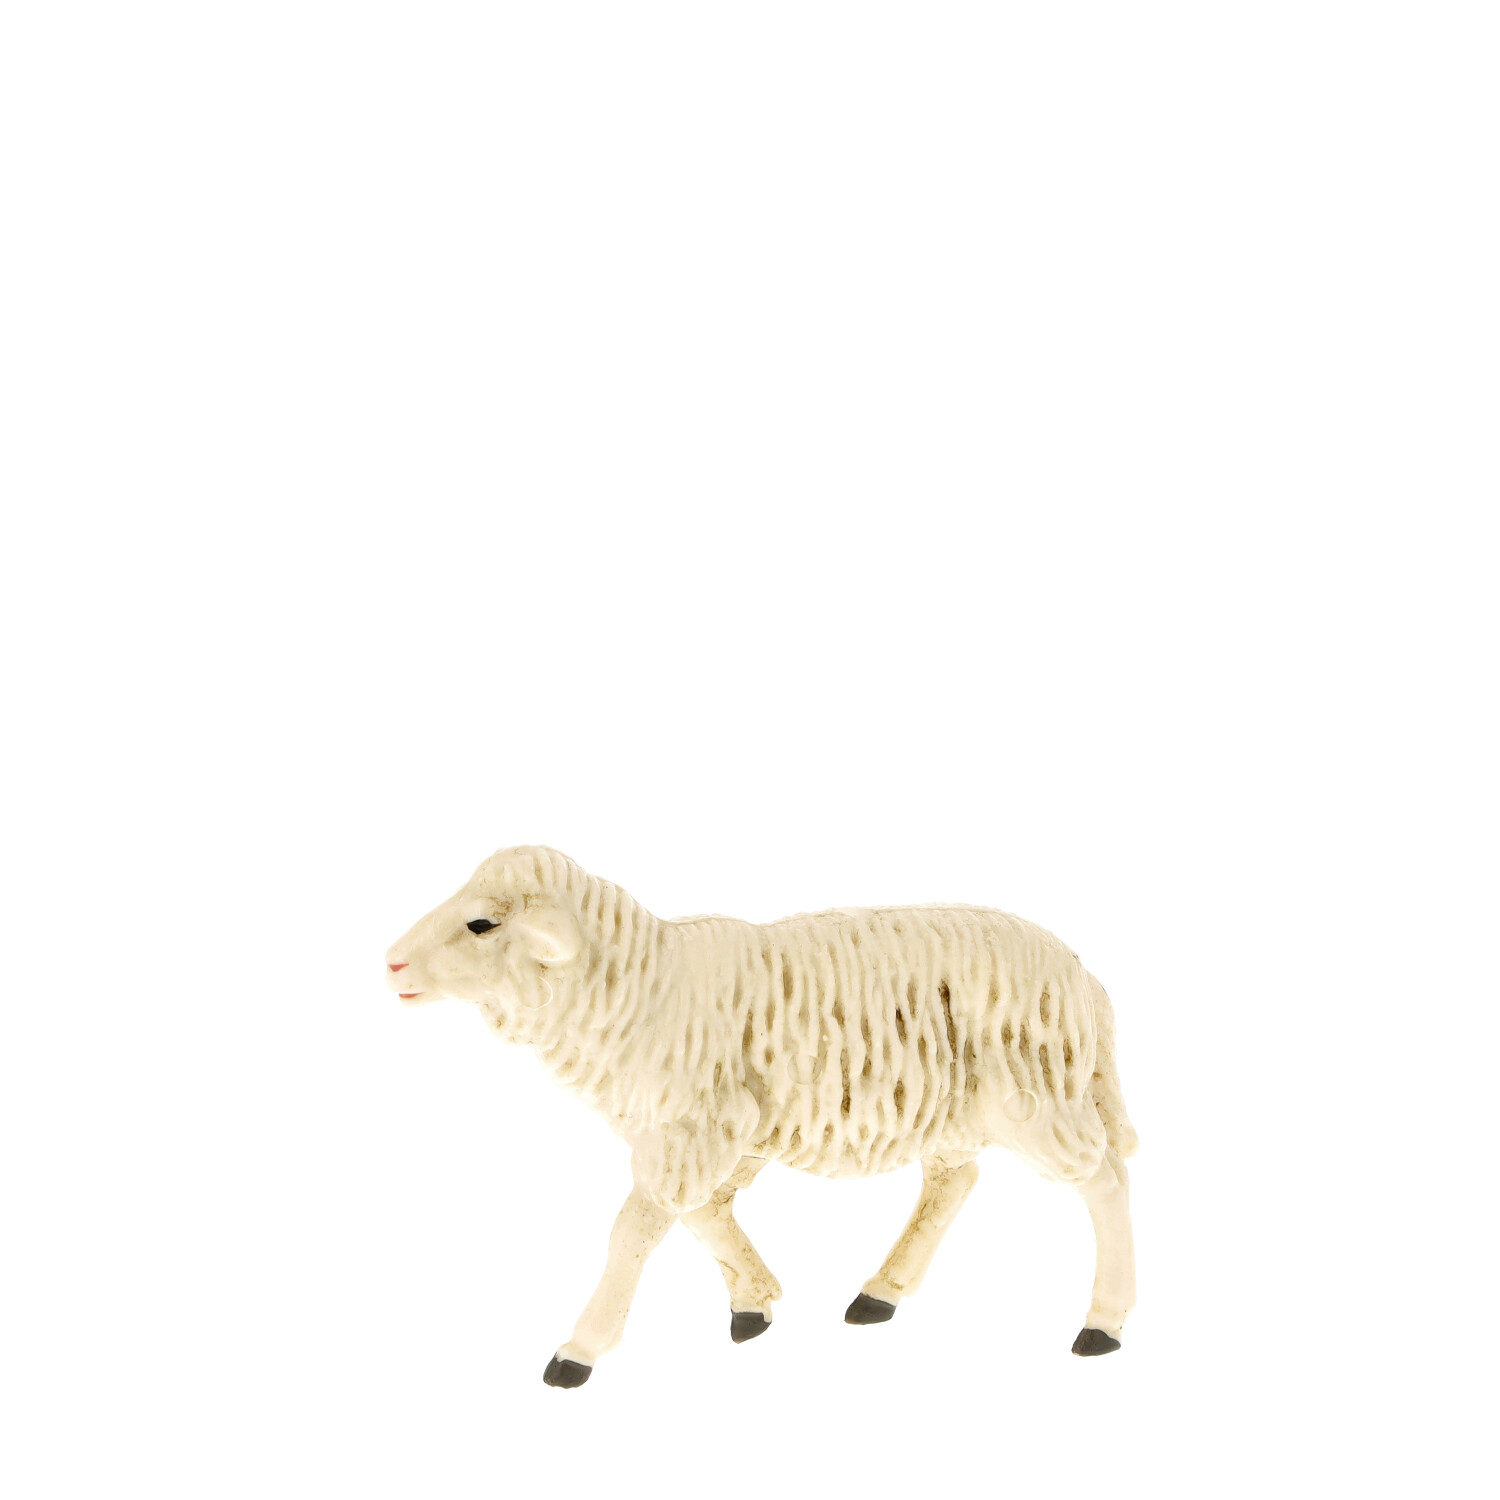 Sheep standing - Marolin Plastik - Resin Nativity figure - made in Germany